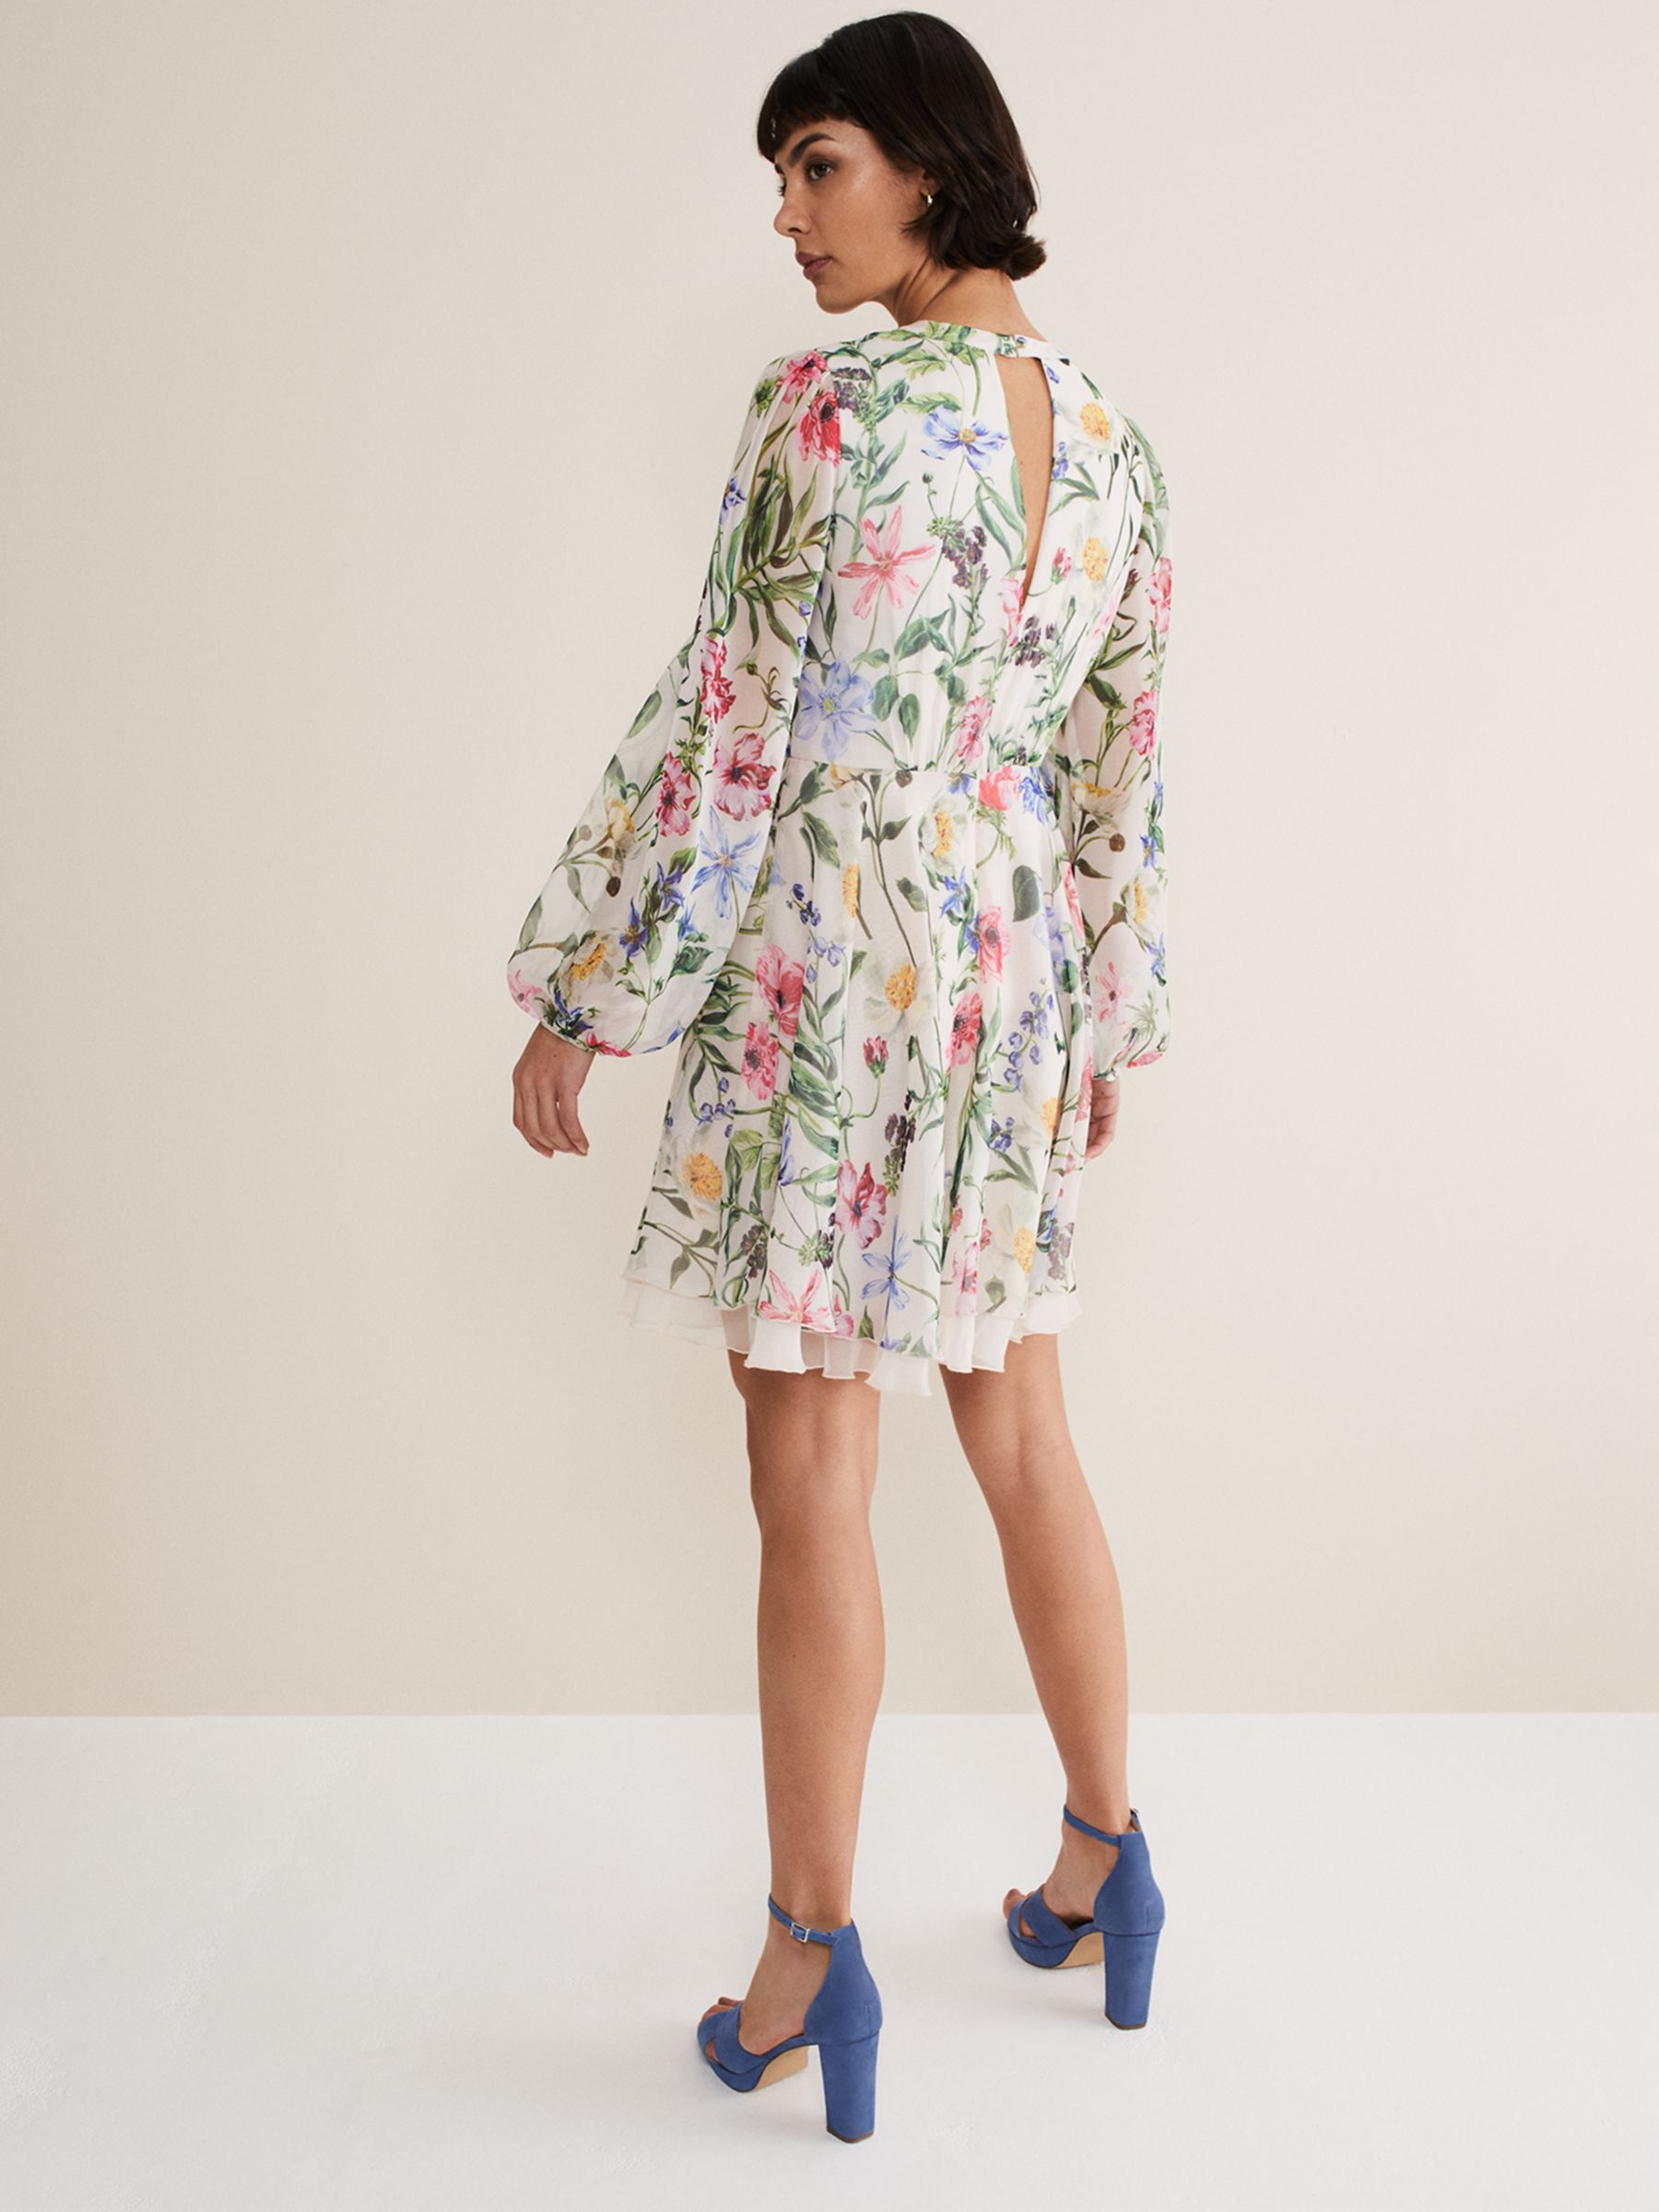 Phase Eight Everleigh Chiffon Floral Mini Dress, Ivory/Multi, 8